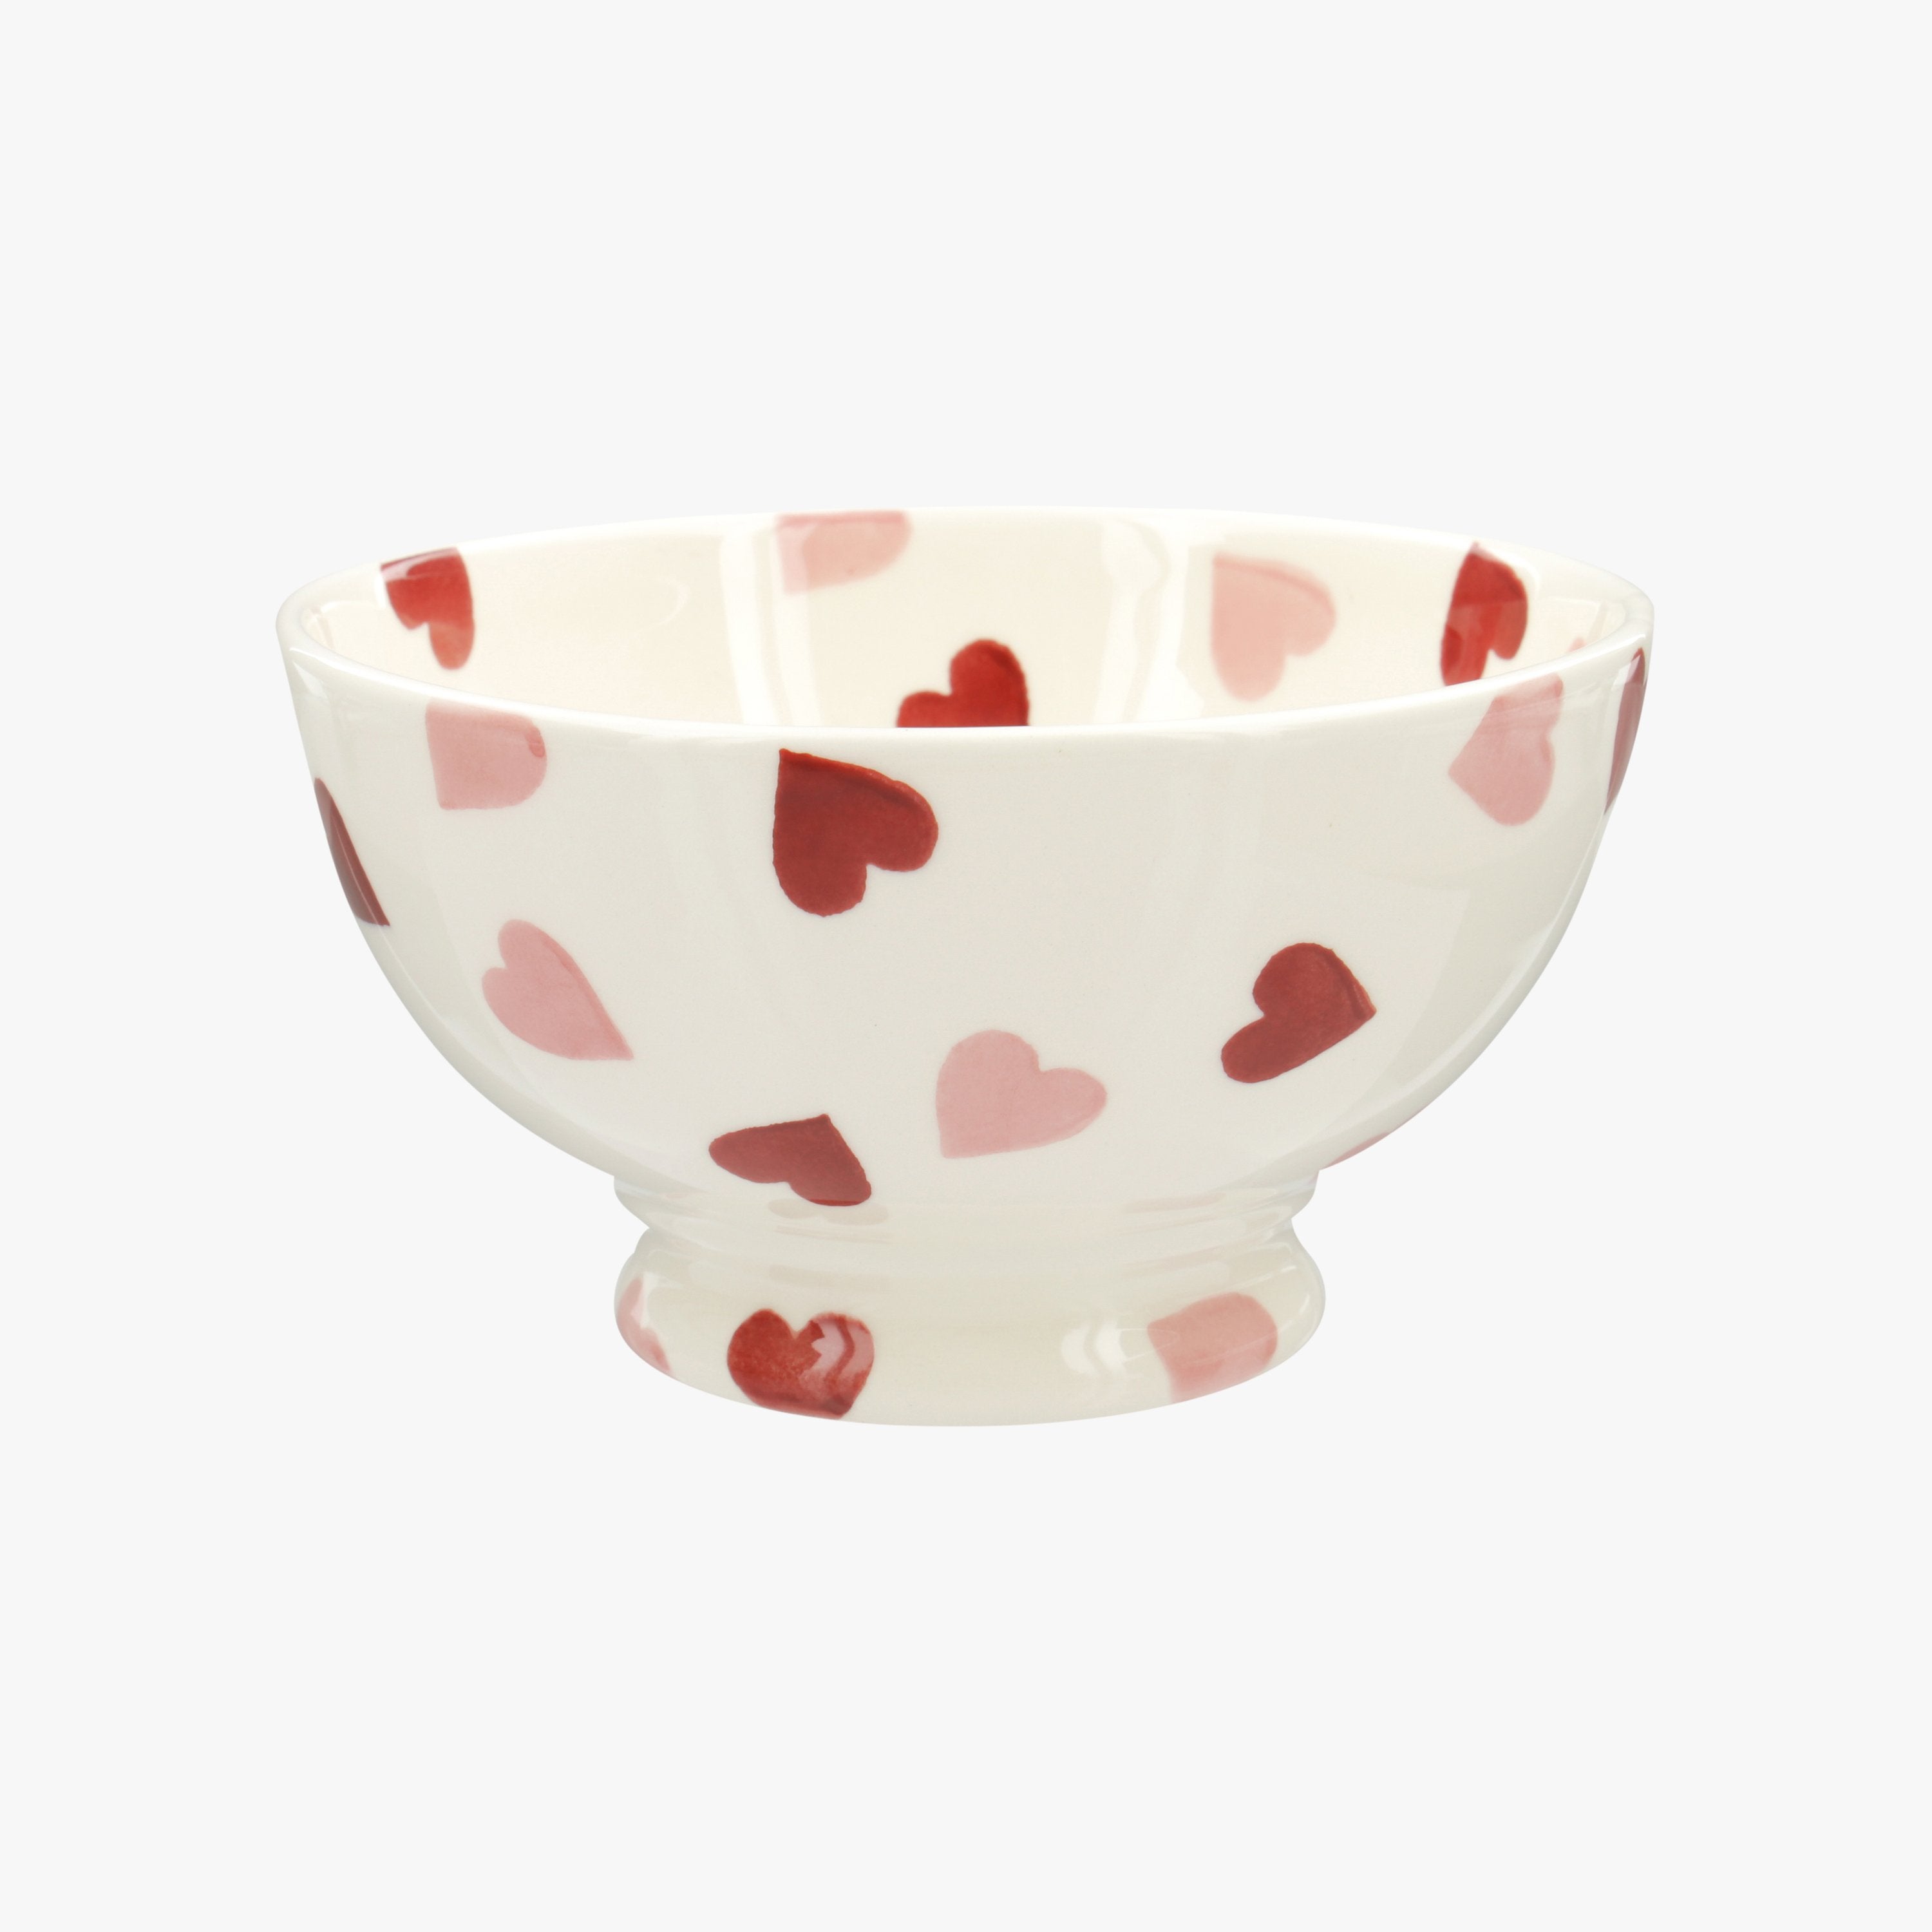 Emma Bridgewater  Pink Hearts French Bowl - Unique Handmade & Handpainted English Earthenware Decora